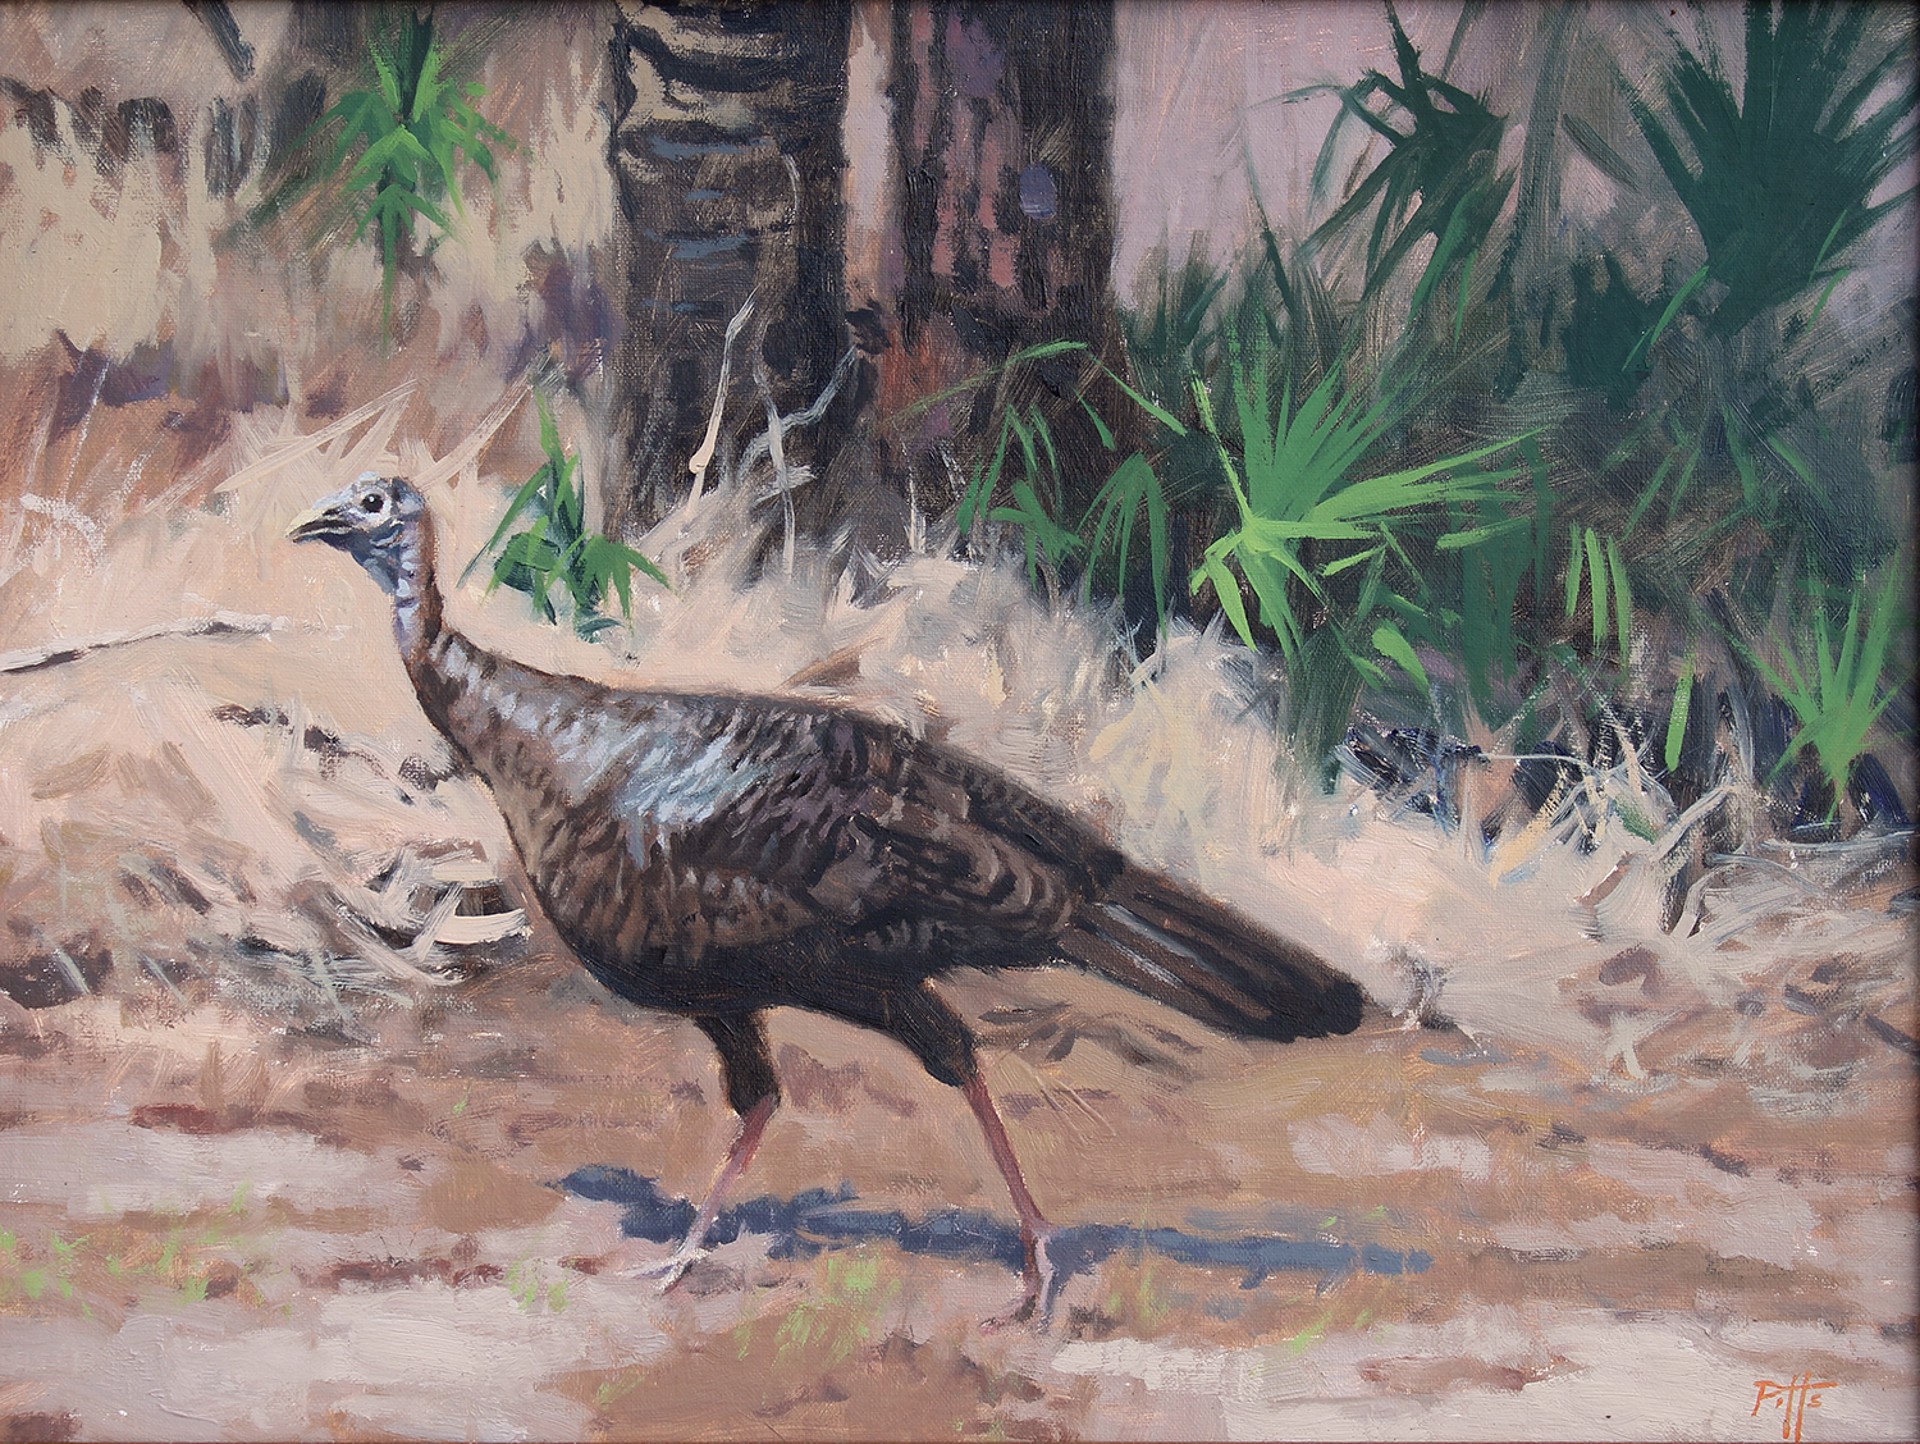 Wild Turkey by Randy Pitts